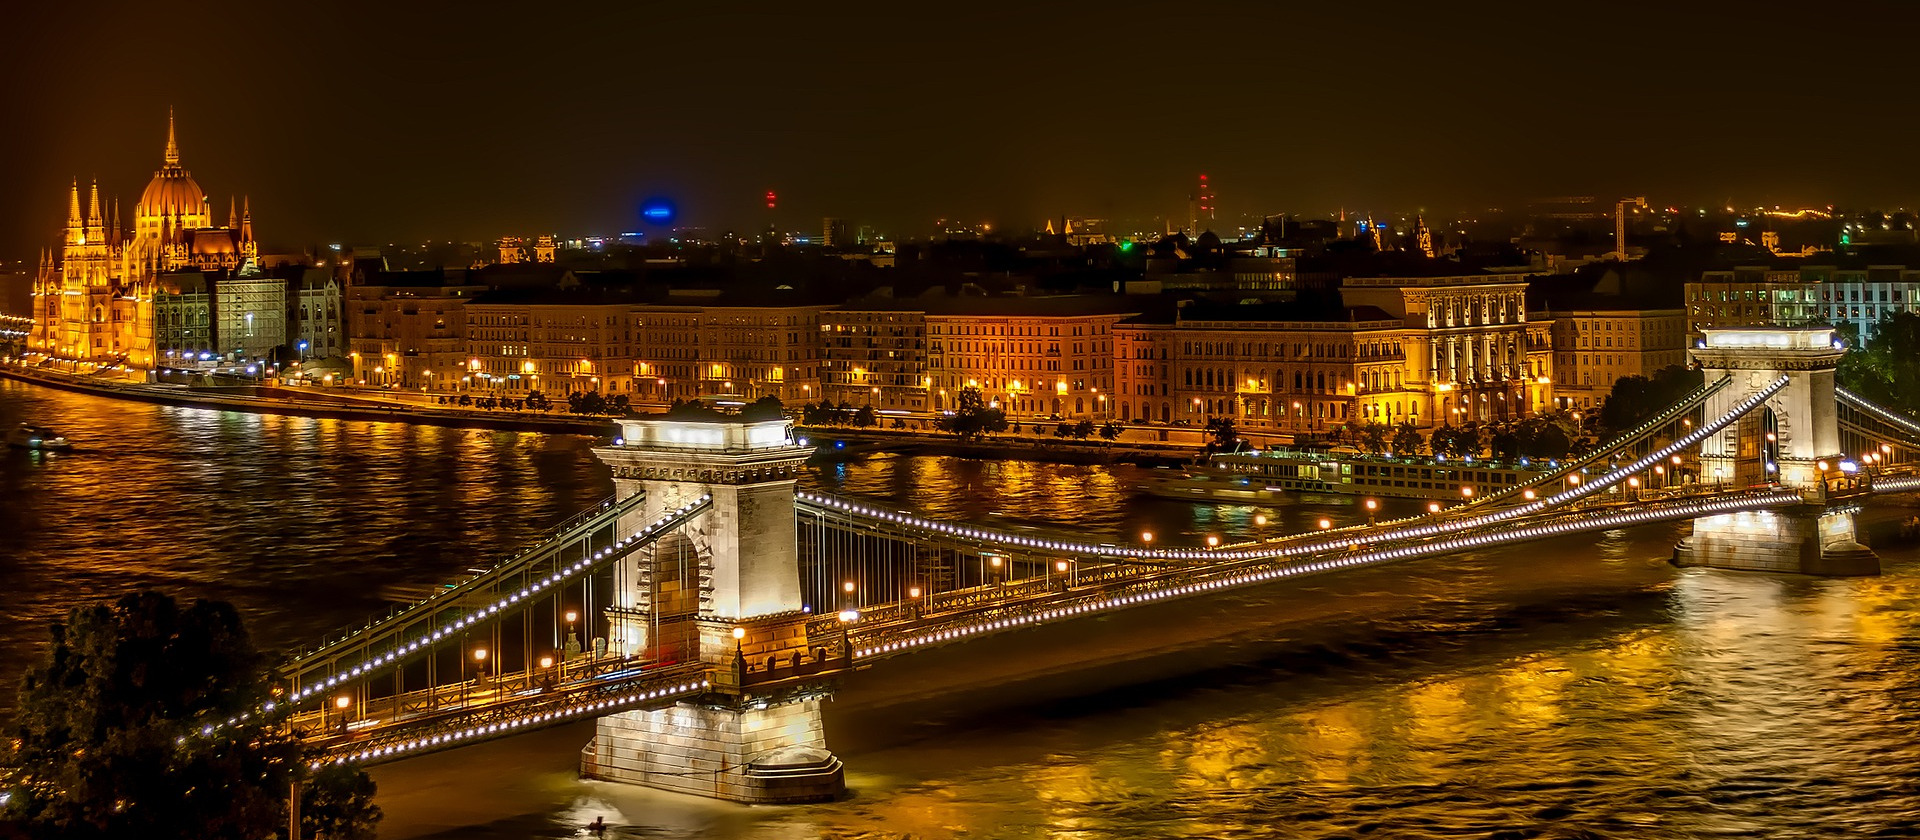 Szechenyi Chain Bridge crosses the Danube in Budapest, Hungary.